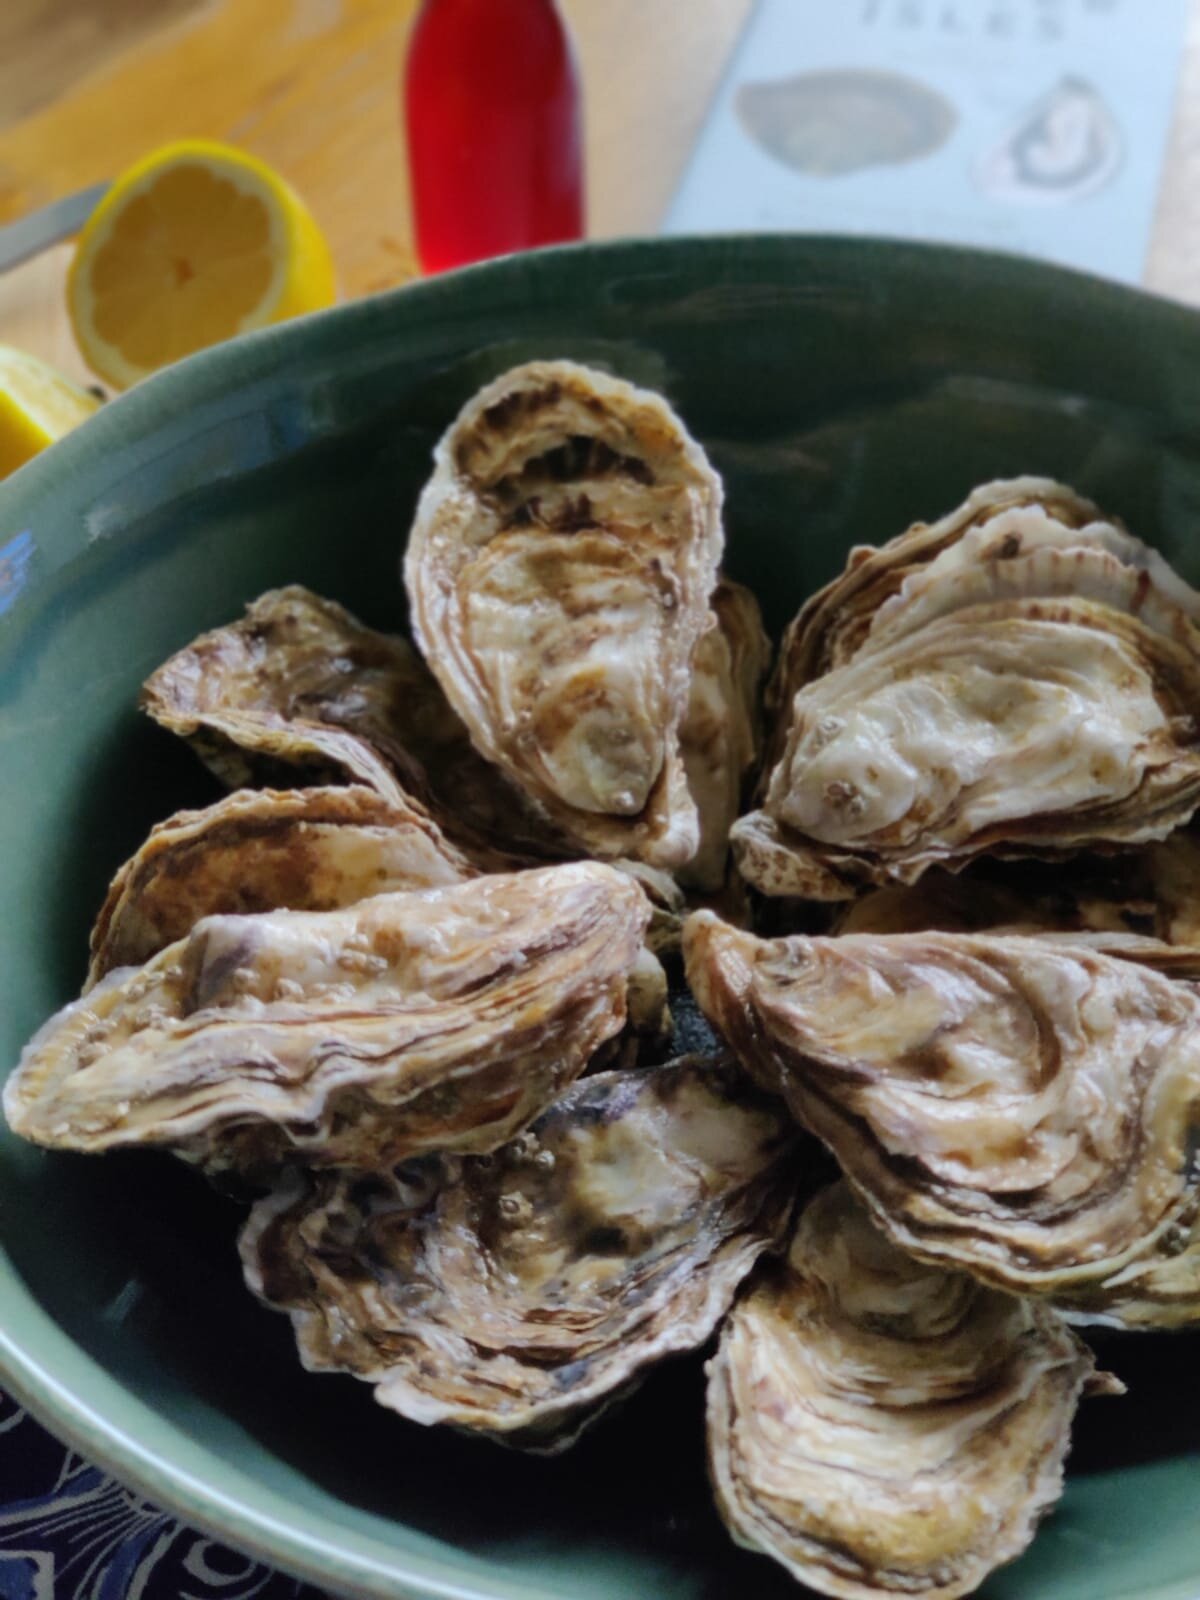 Porlock bay oysters